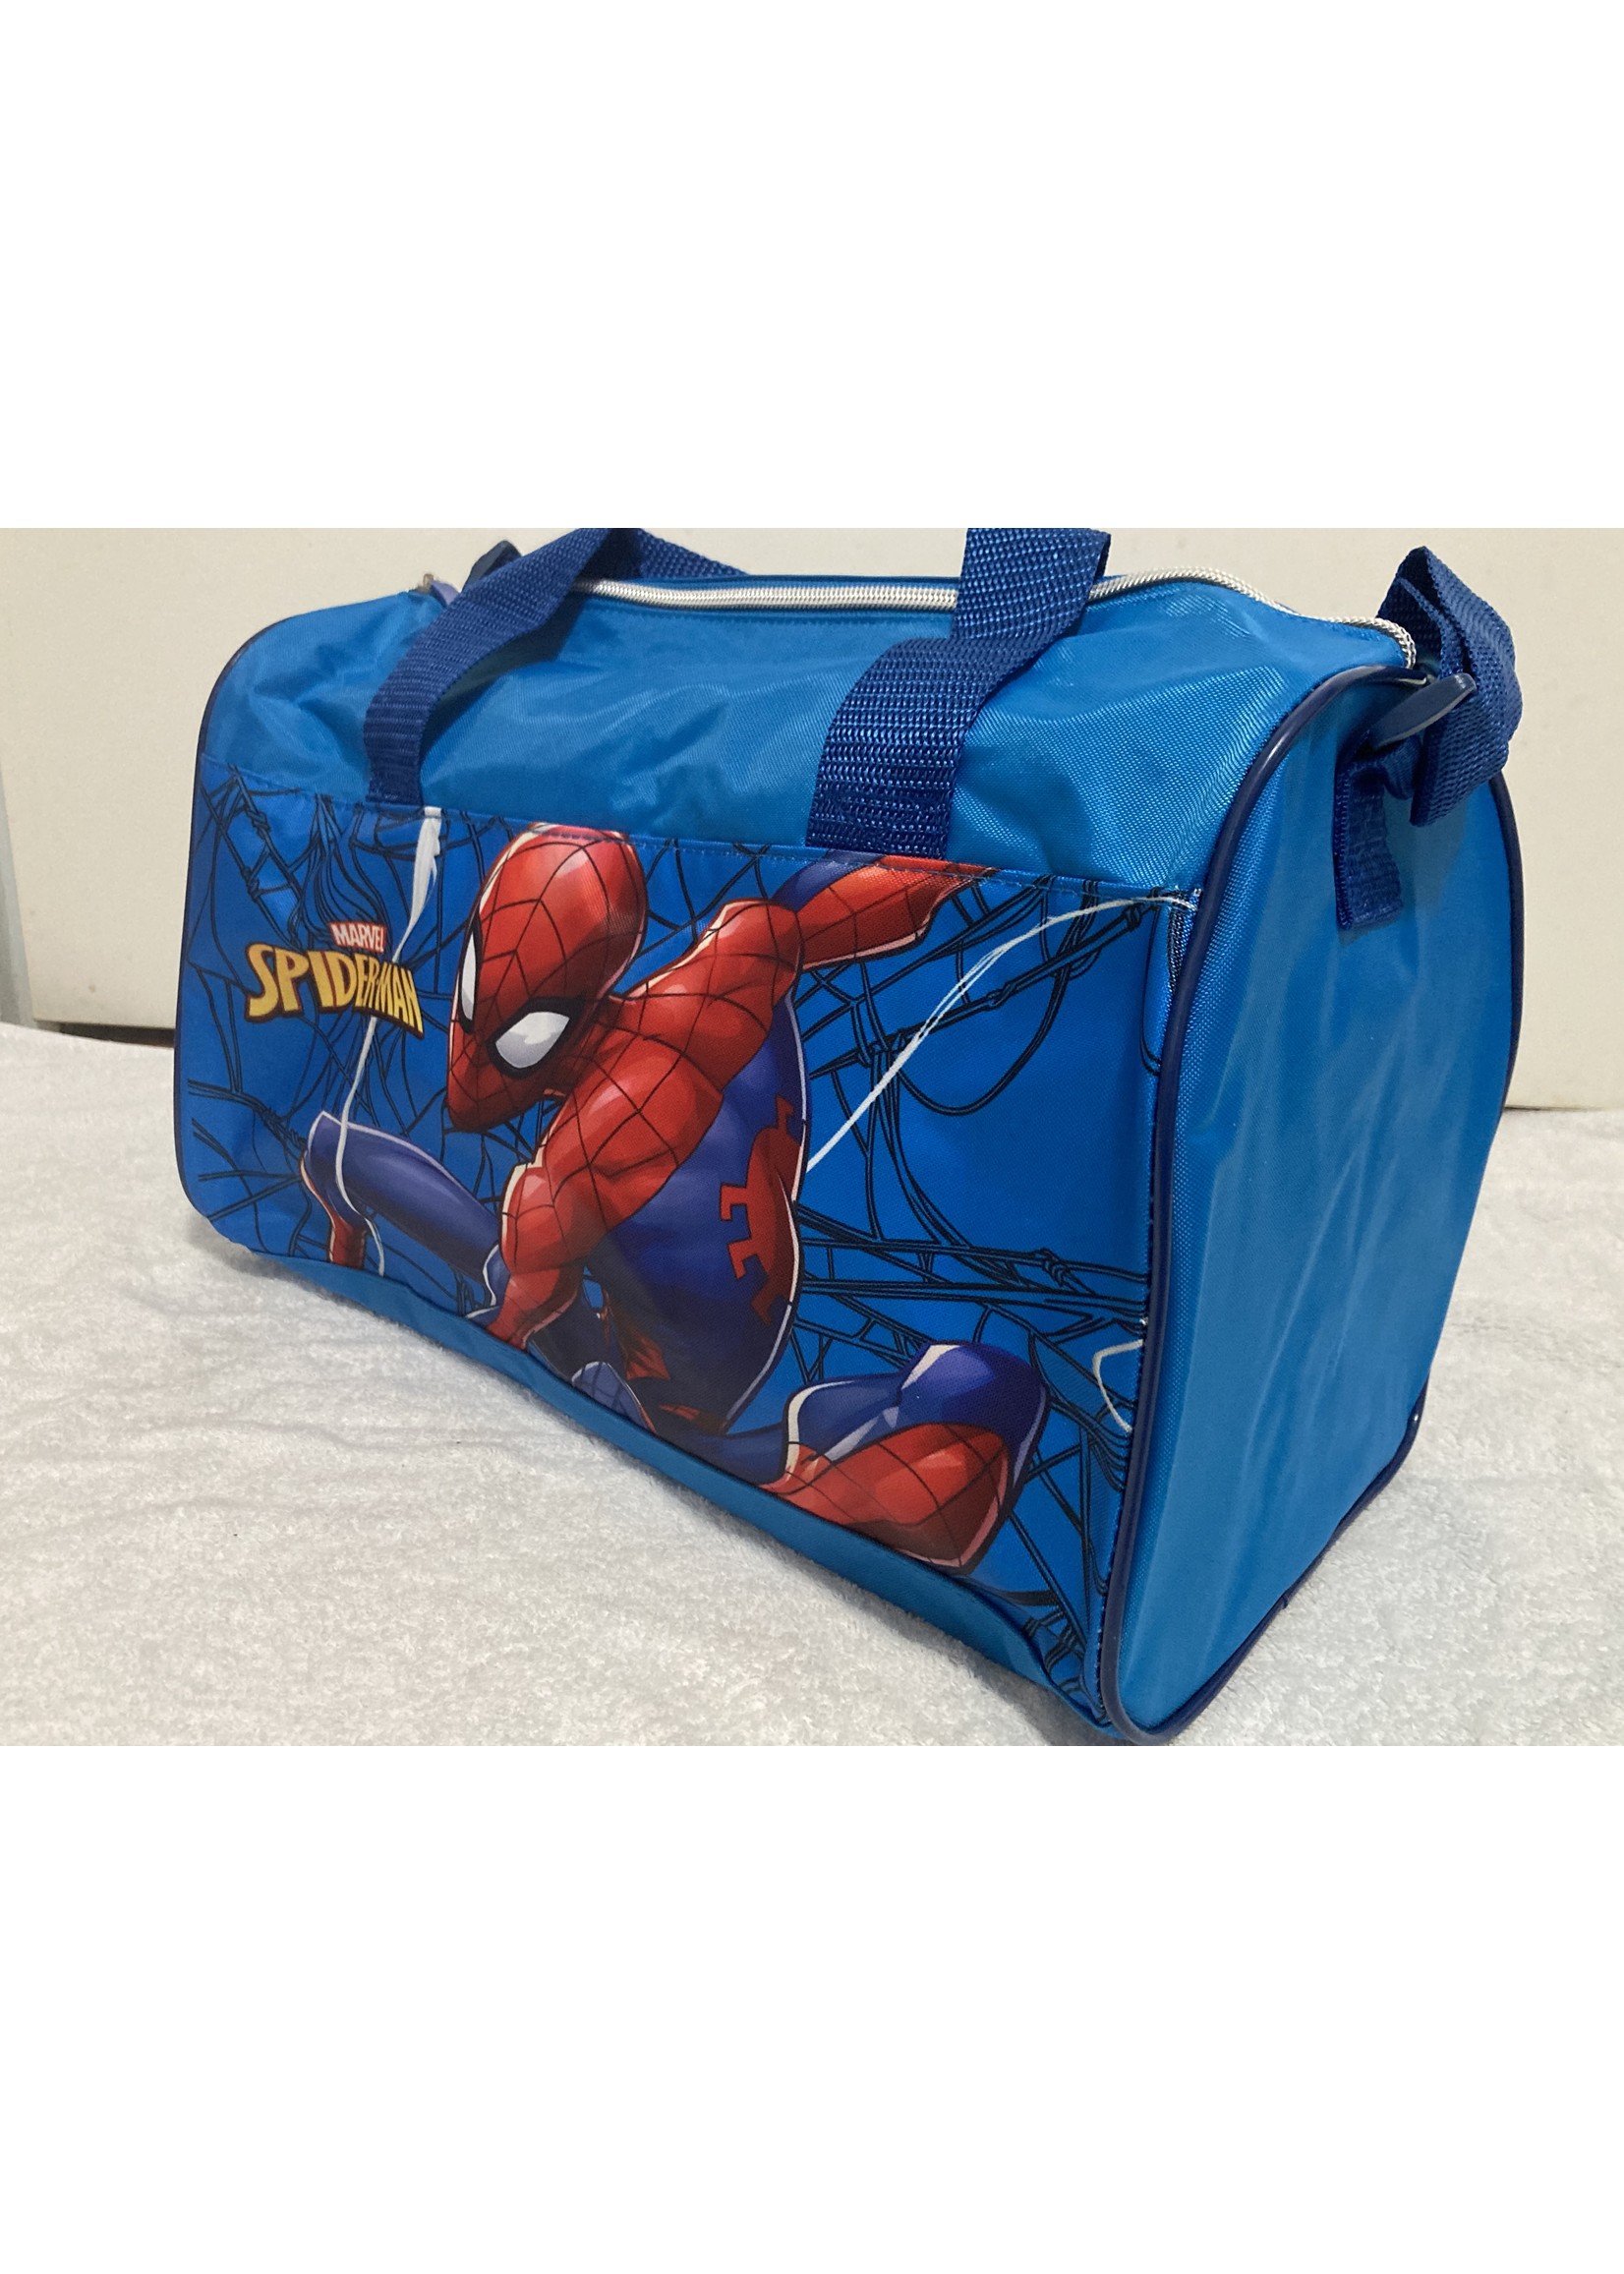 Marvel Spiderman sporttas van Marvel blauw